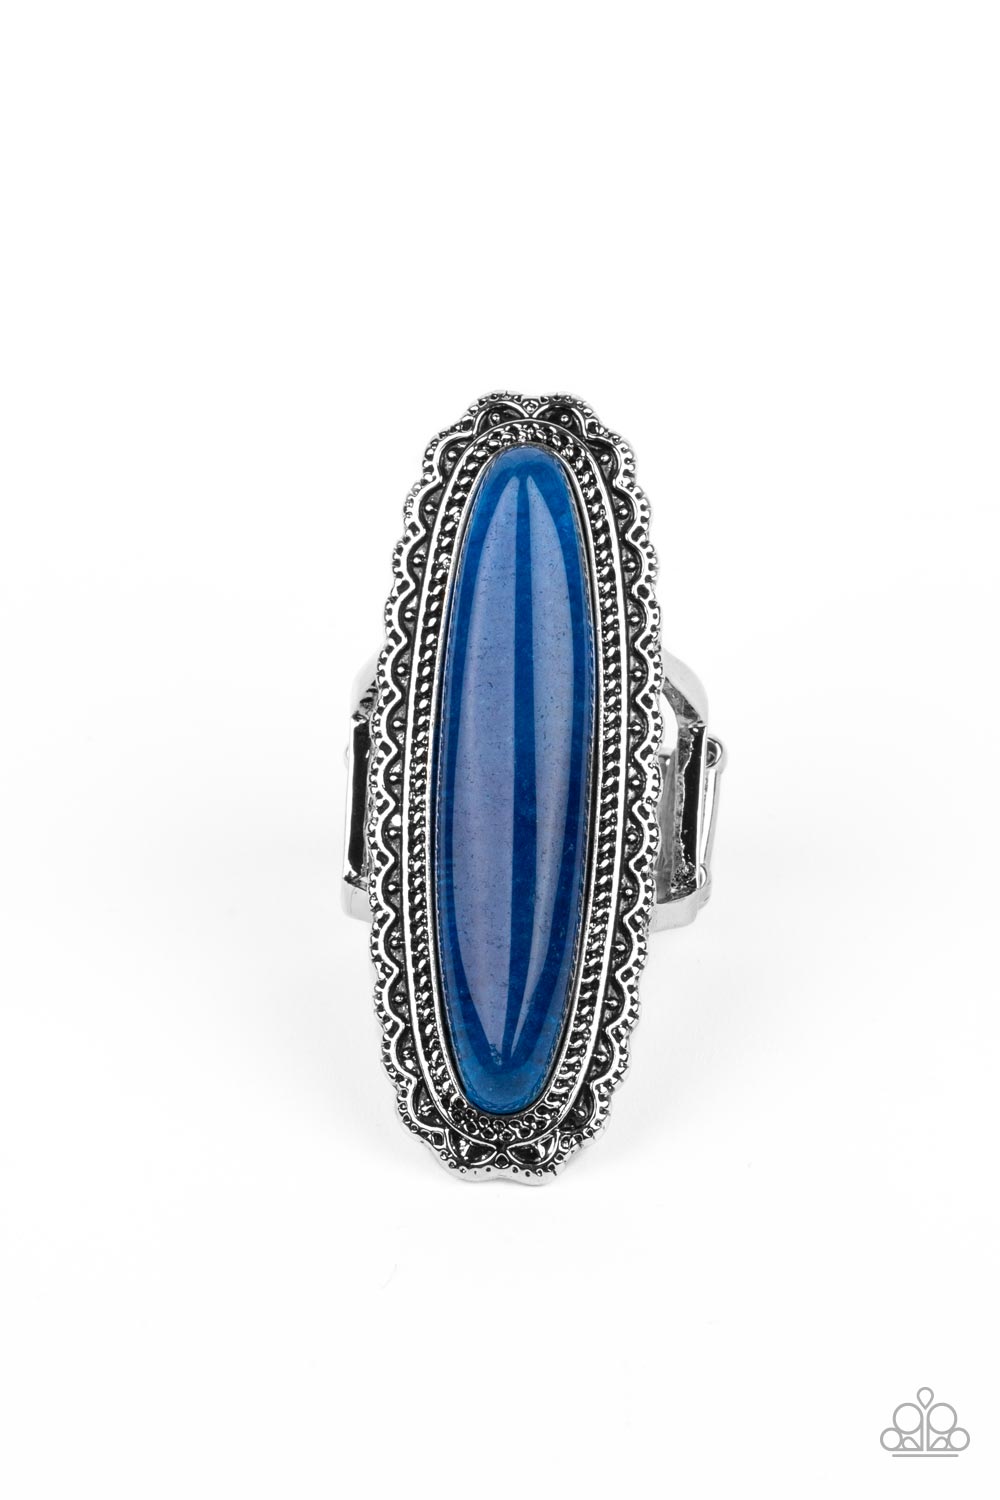 Eco Equinox Blue Lapis Stone Ring - Paparazzi Accessories- lightbox - CarasShop.com - $5 Jewelry by Cara Jewels